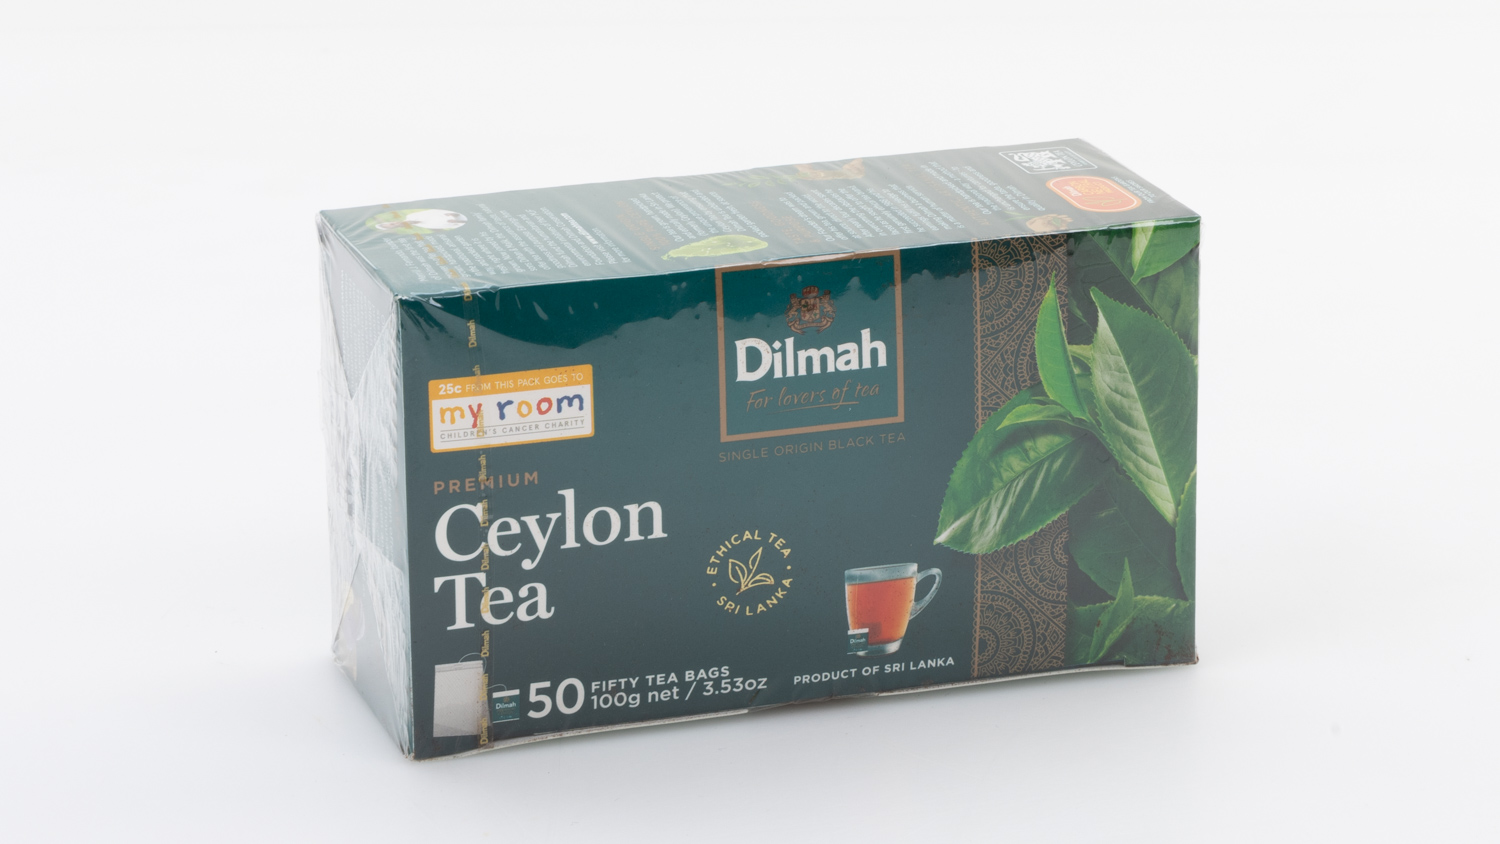 Dilmah Premium Ceylon Tea carousel image